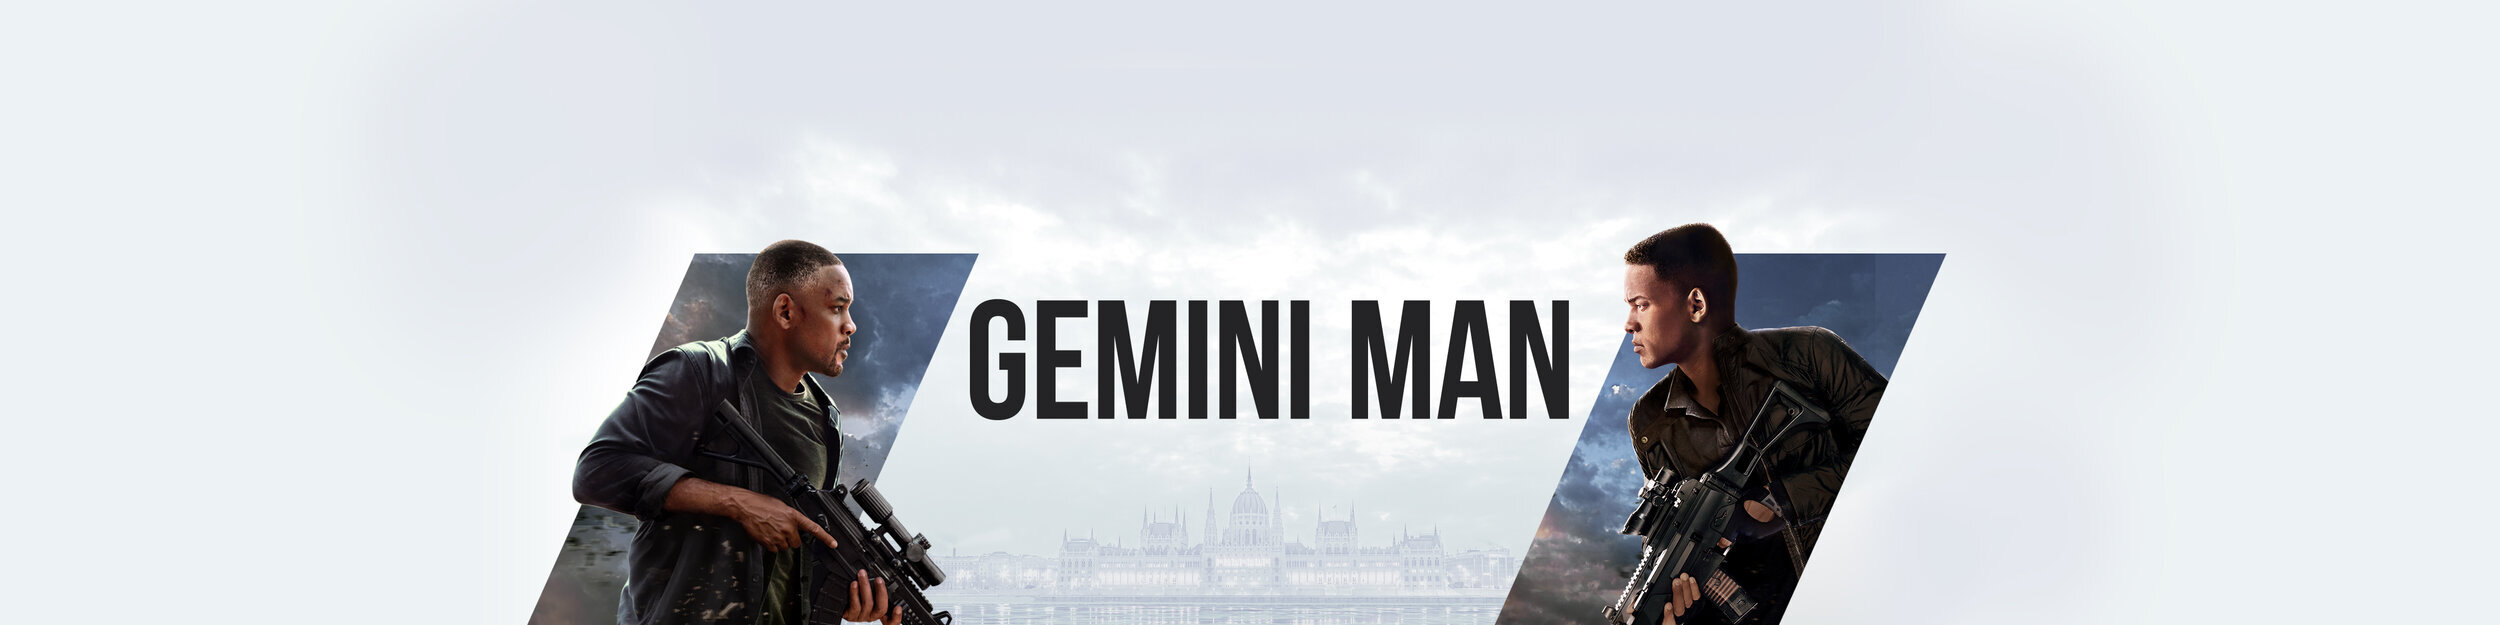 GeminiMan_2019_iTunes_Featuring_4320x1080_JM5.jpg